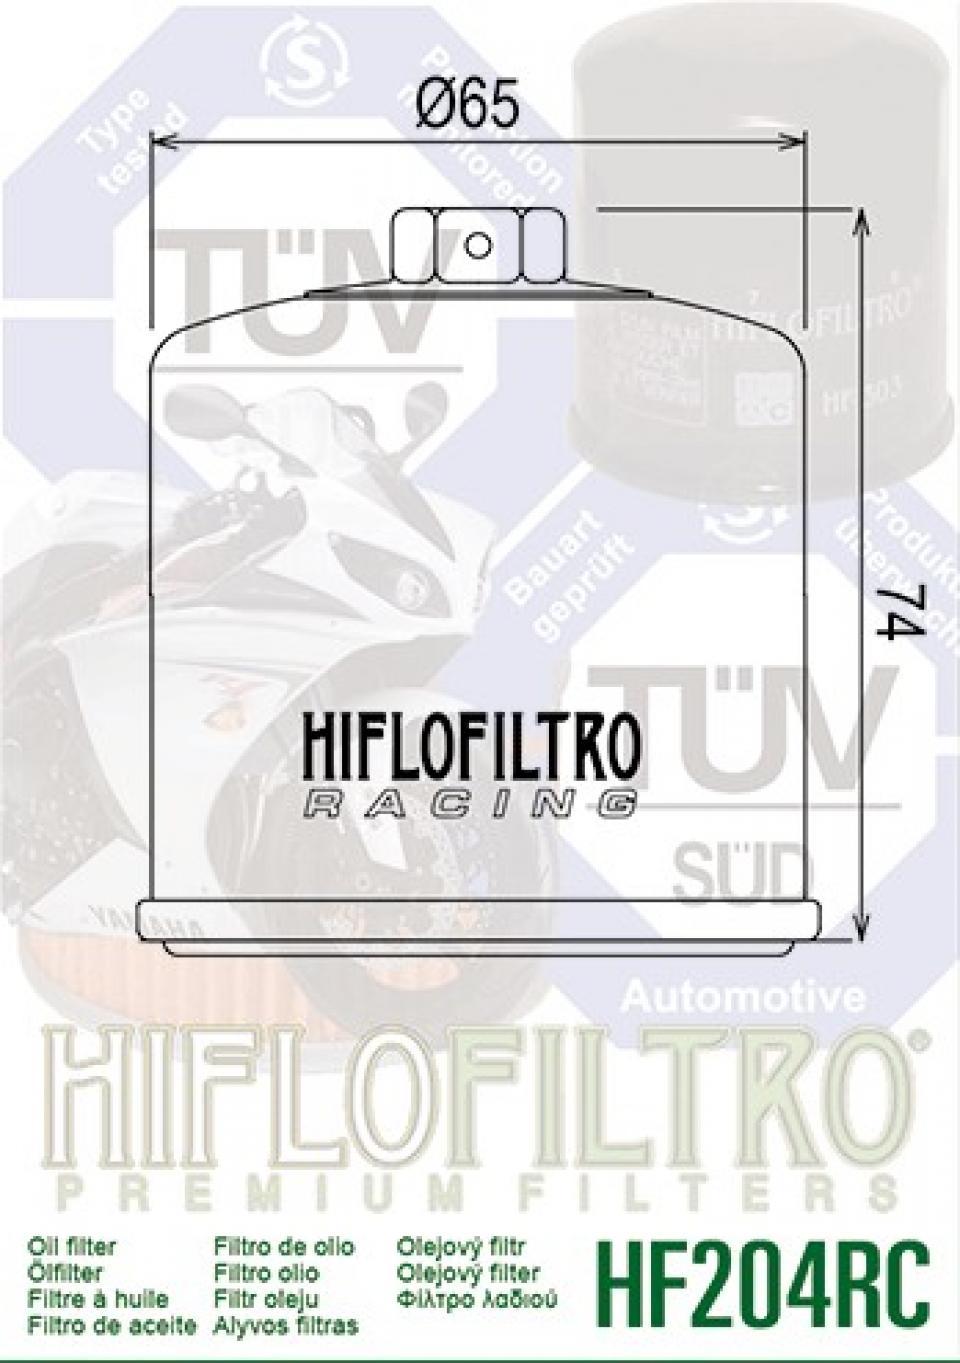 Filtre à huile Hiflofiltro pour Moto Triumph 955 Tiger 2005 à 2006 Neuf